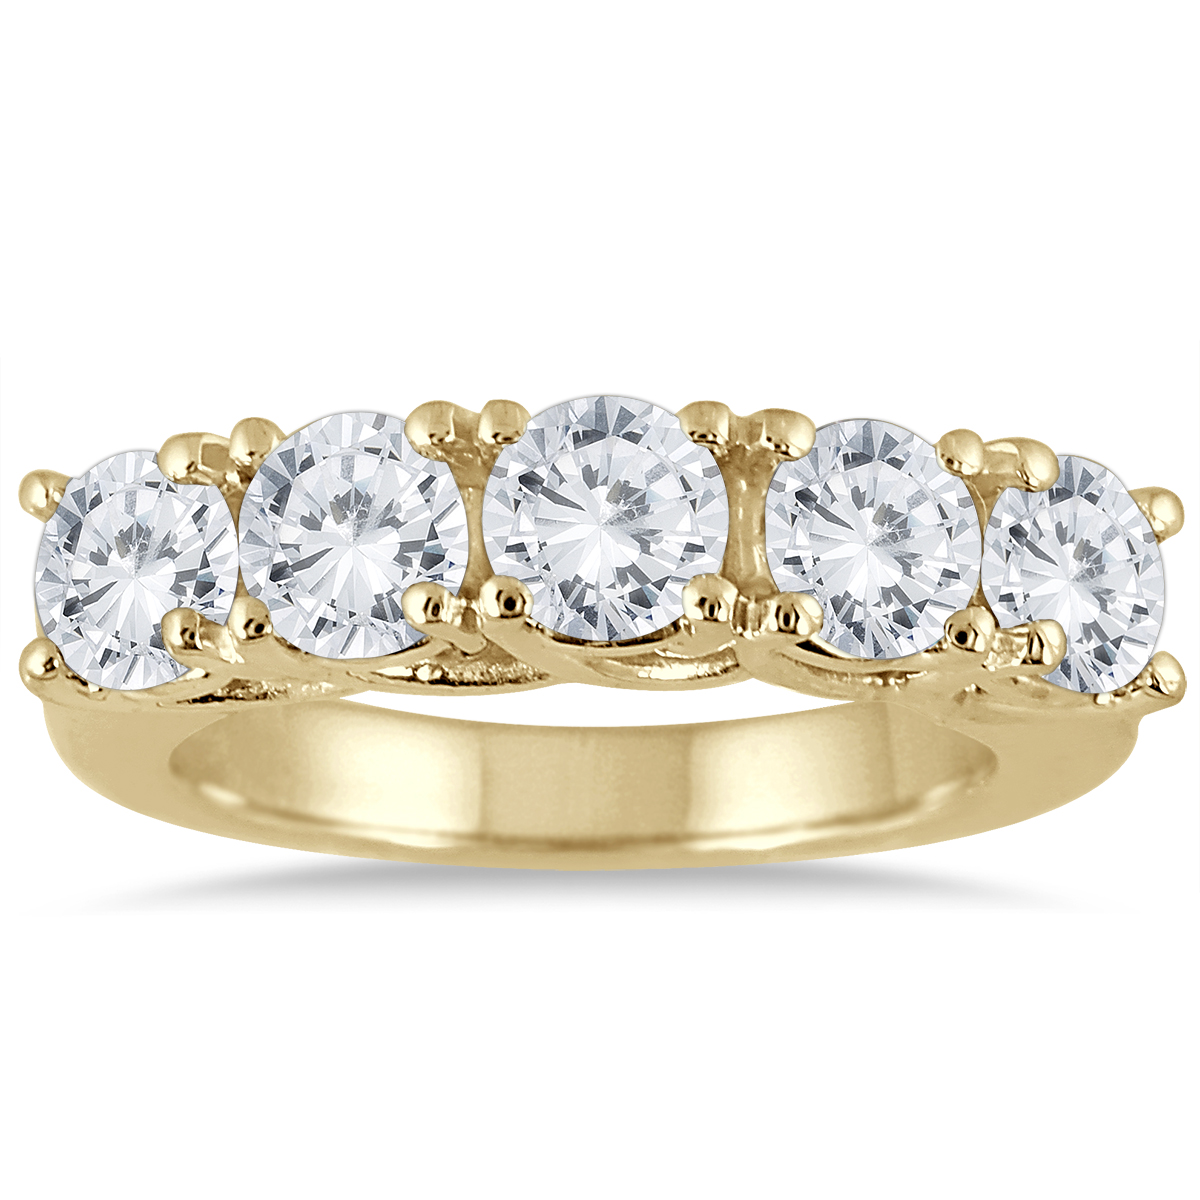 3 Carat TW Five Stone Diamond Wedding Band in 14K Yellow Gold